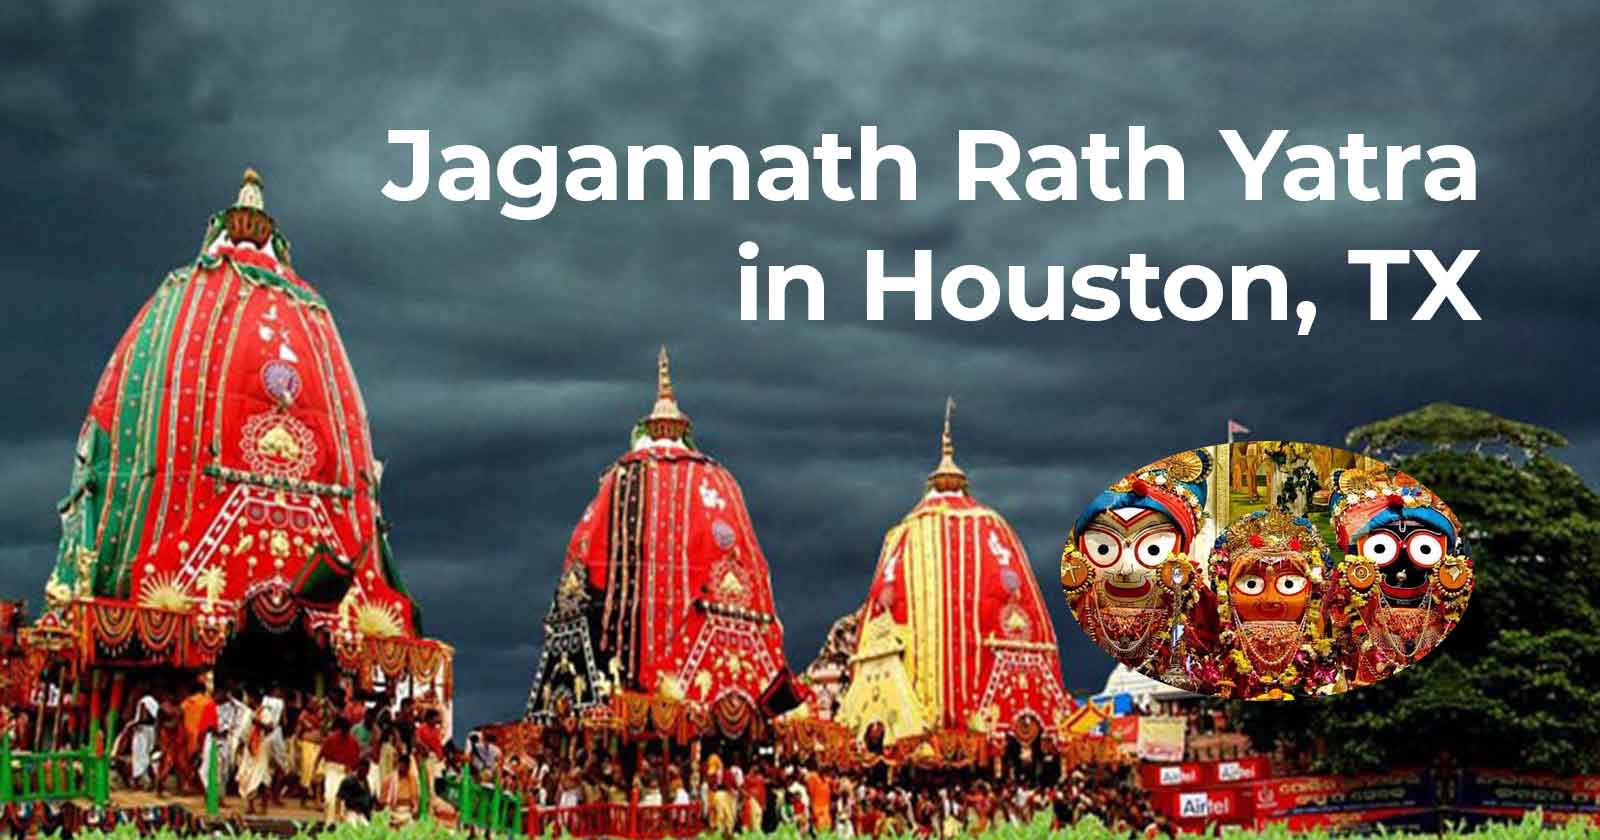 Jagannath Rath Yatra in Houston